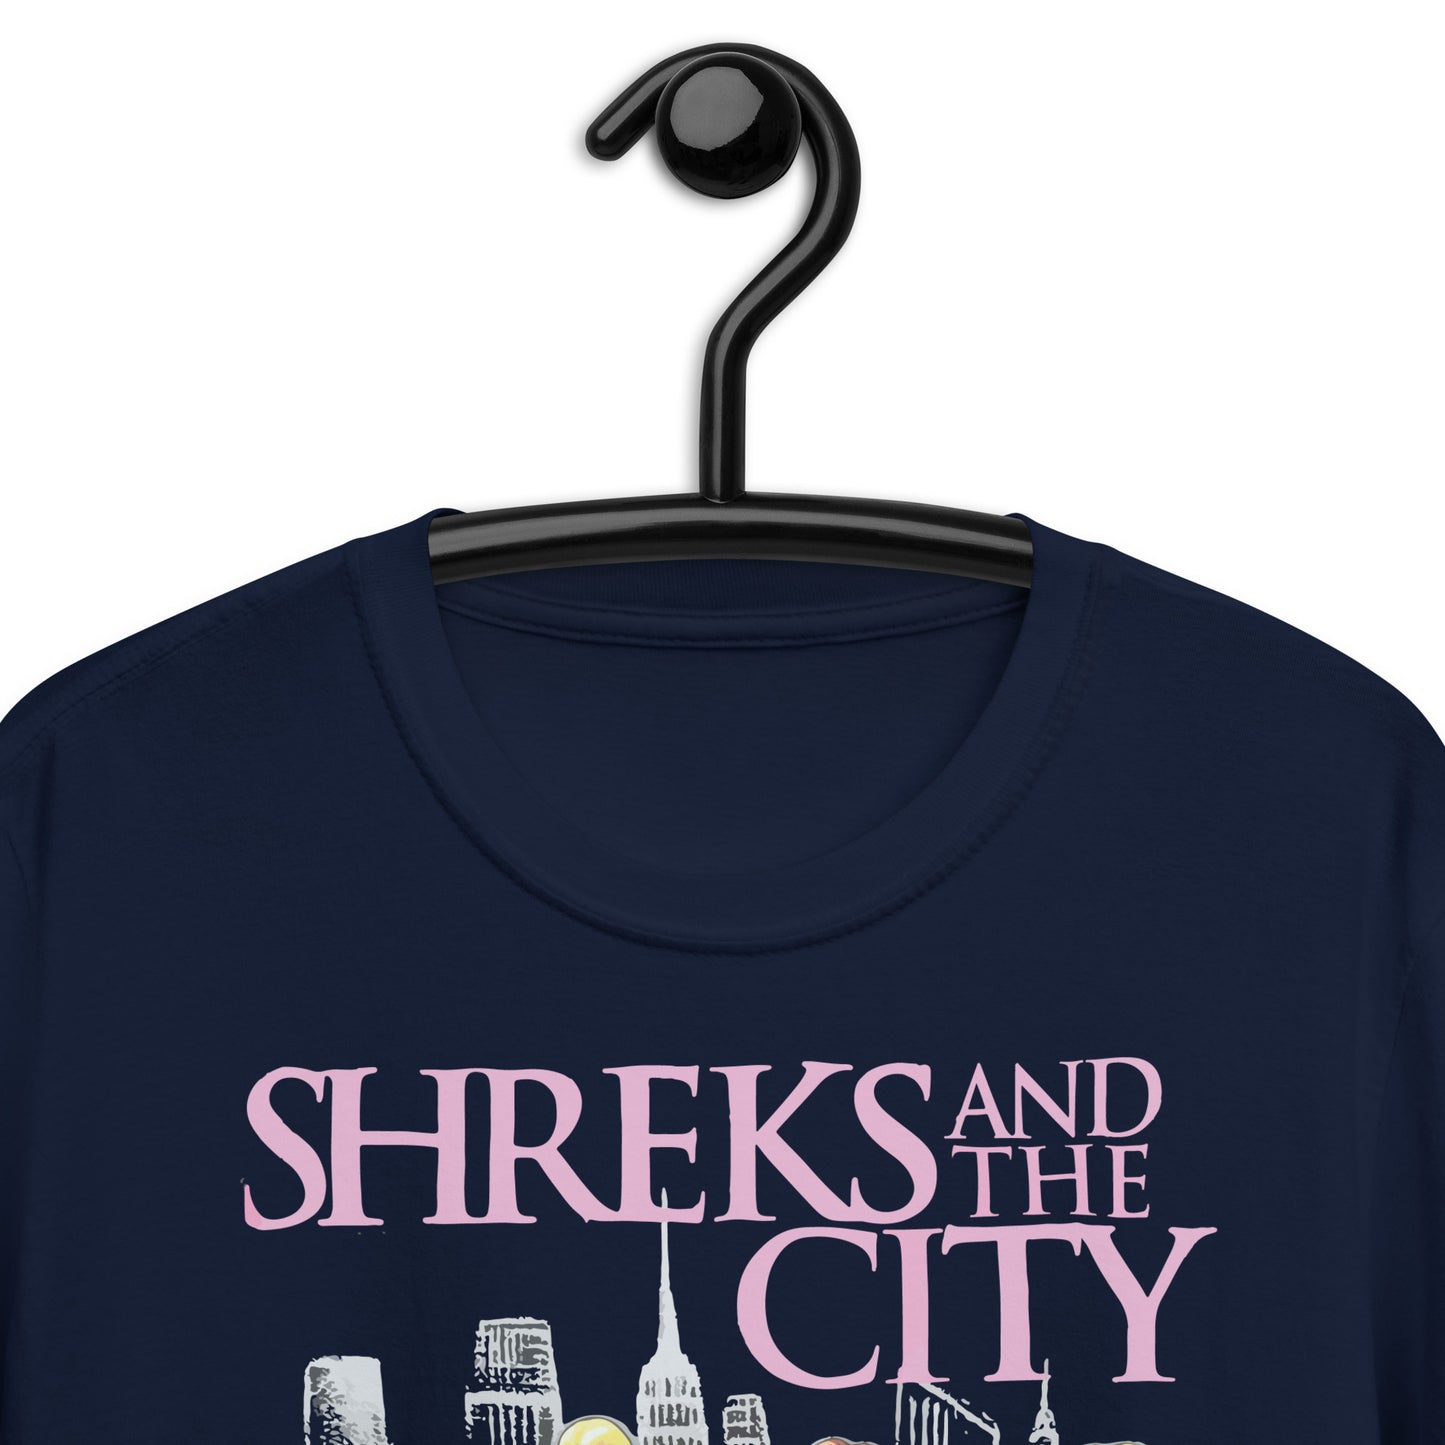 Ogre and the City Short-Sleeve Unisex T-Shirt